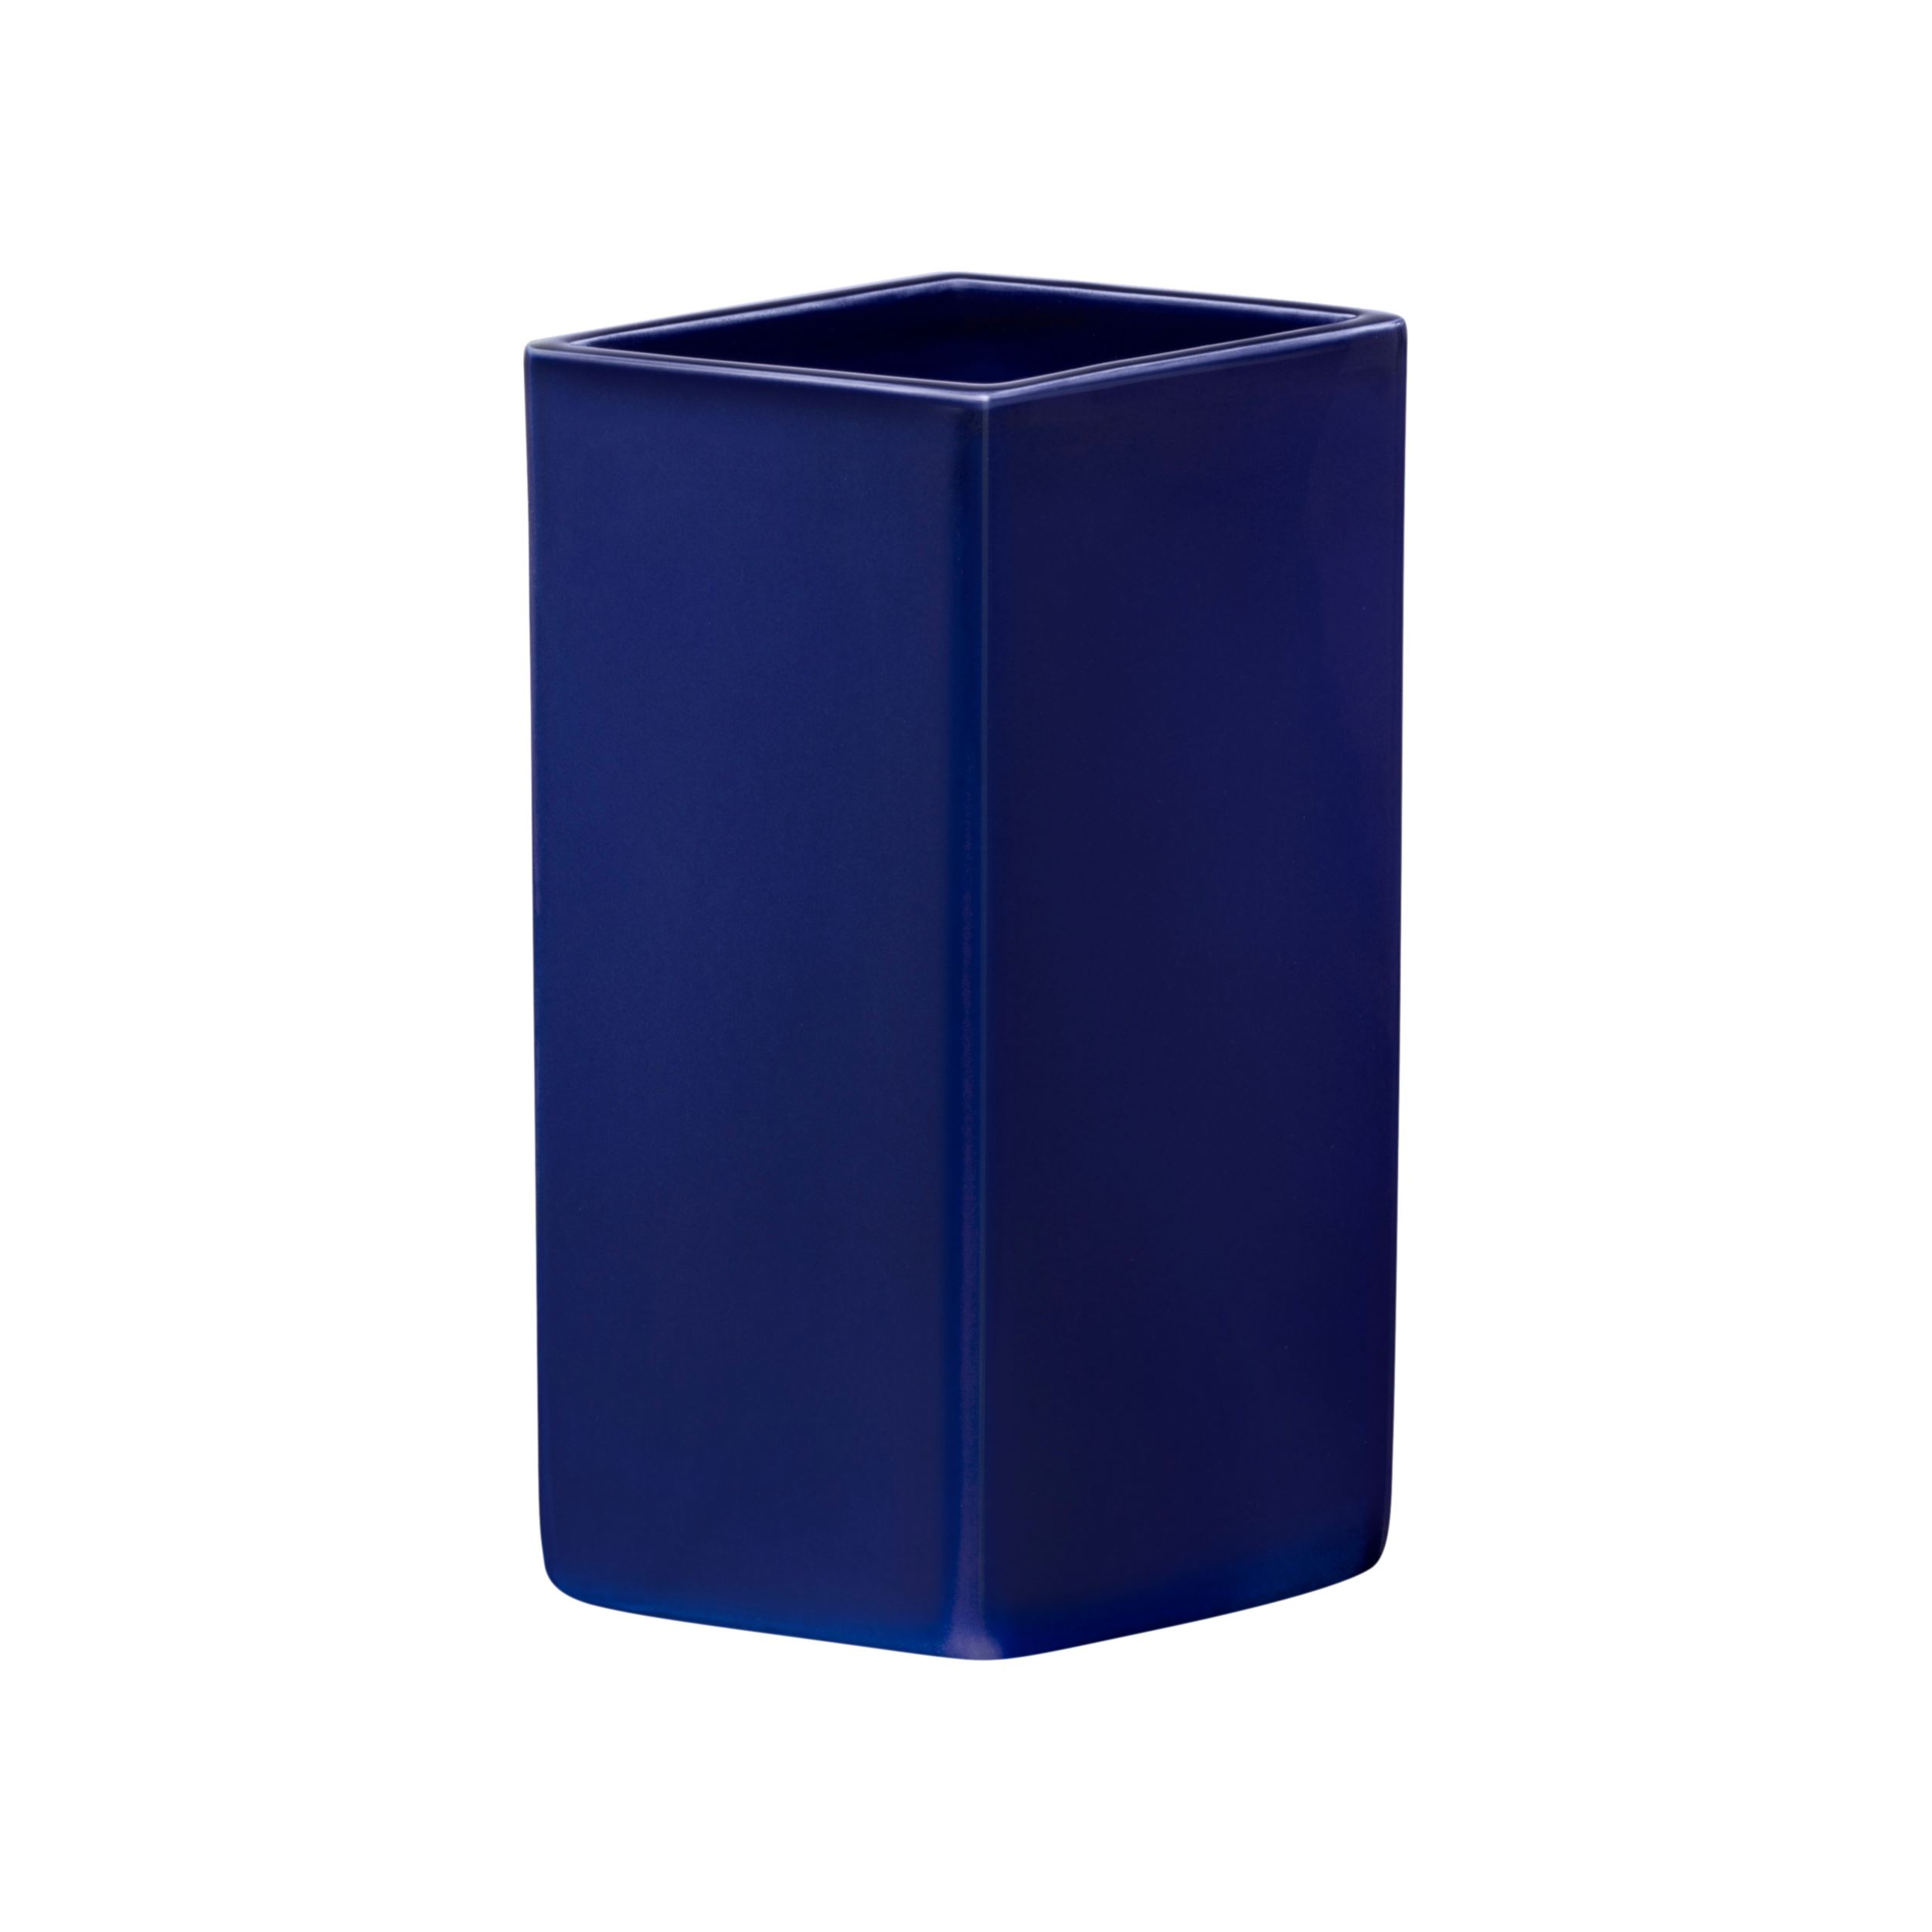 Box of 6 180mm Square Bud Vase 